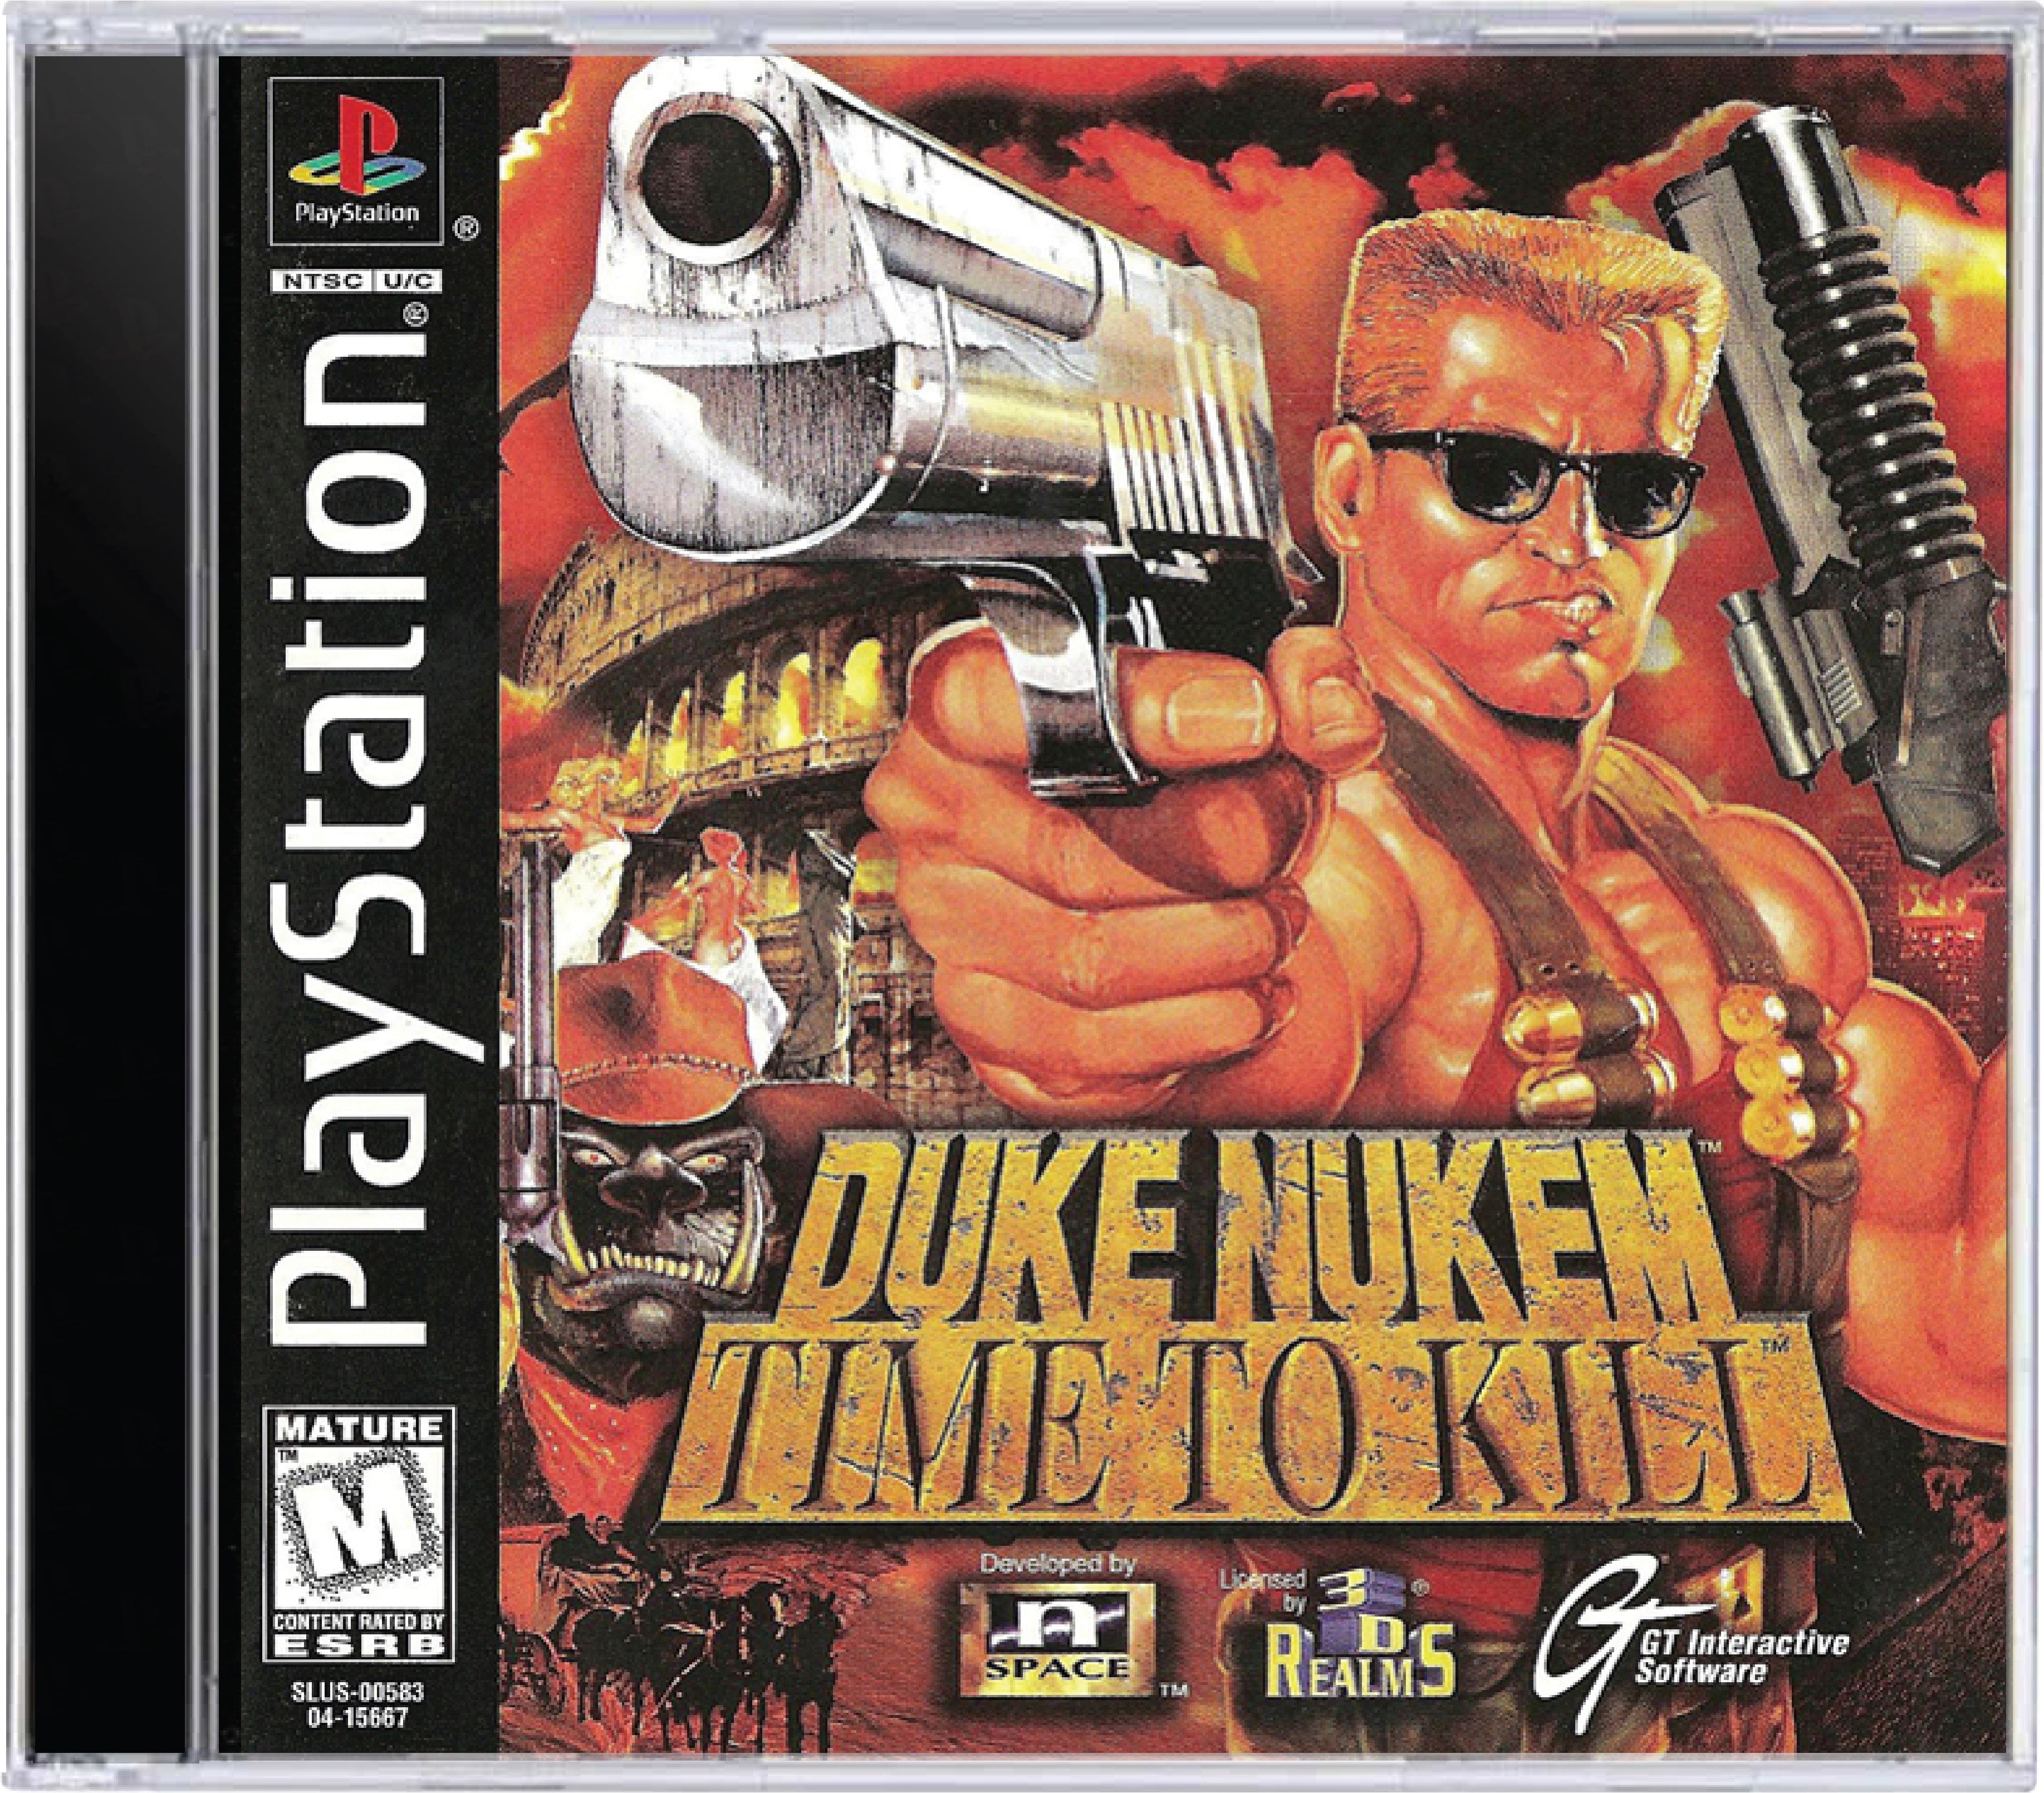 Duke Nukem Time to Kill Cover Art and Product Photo